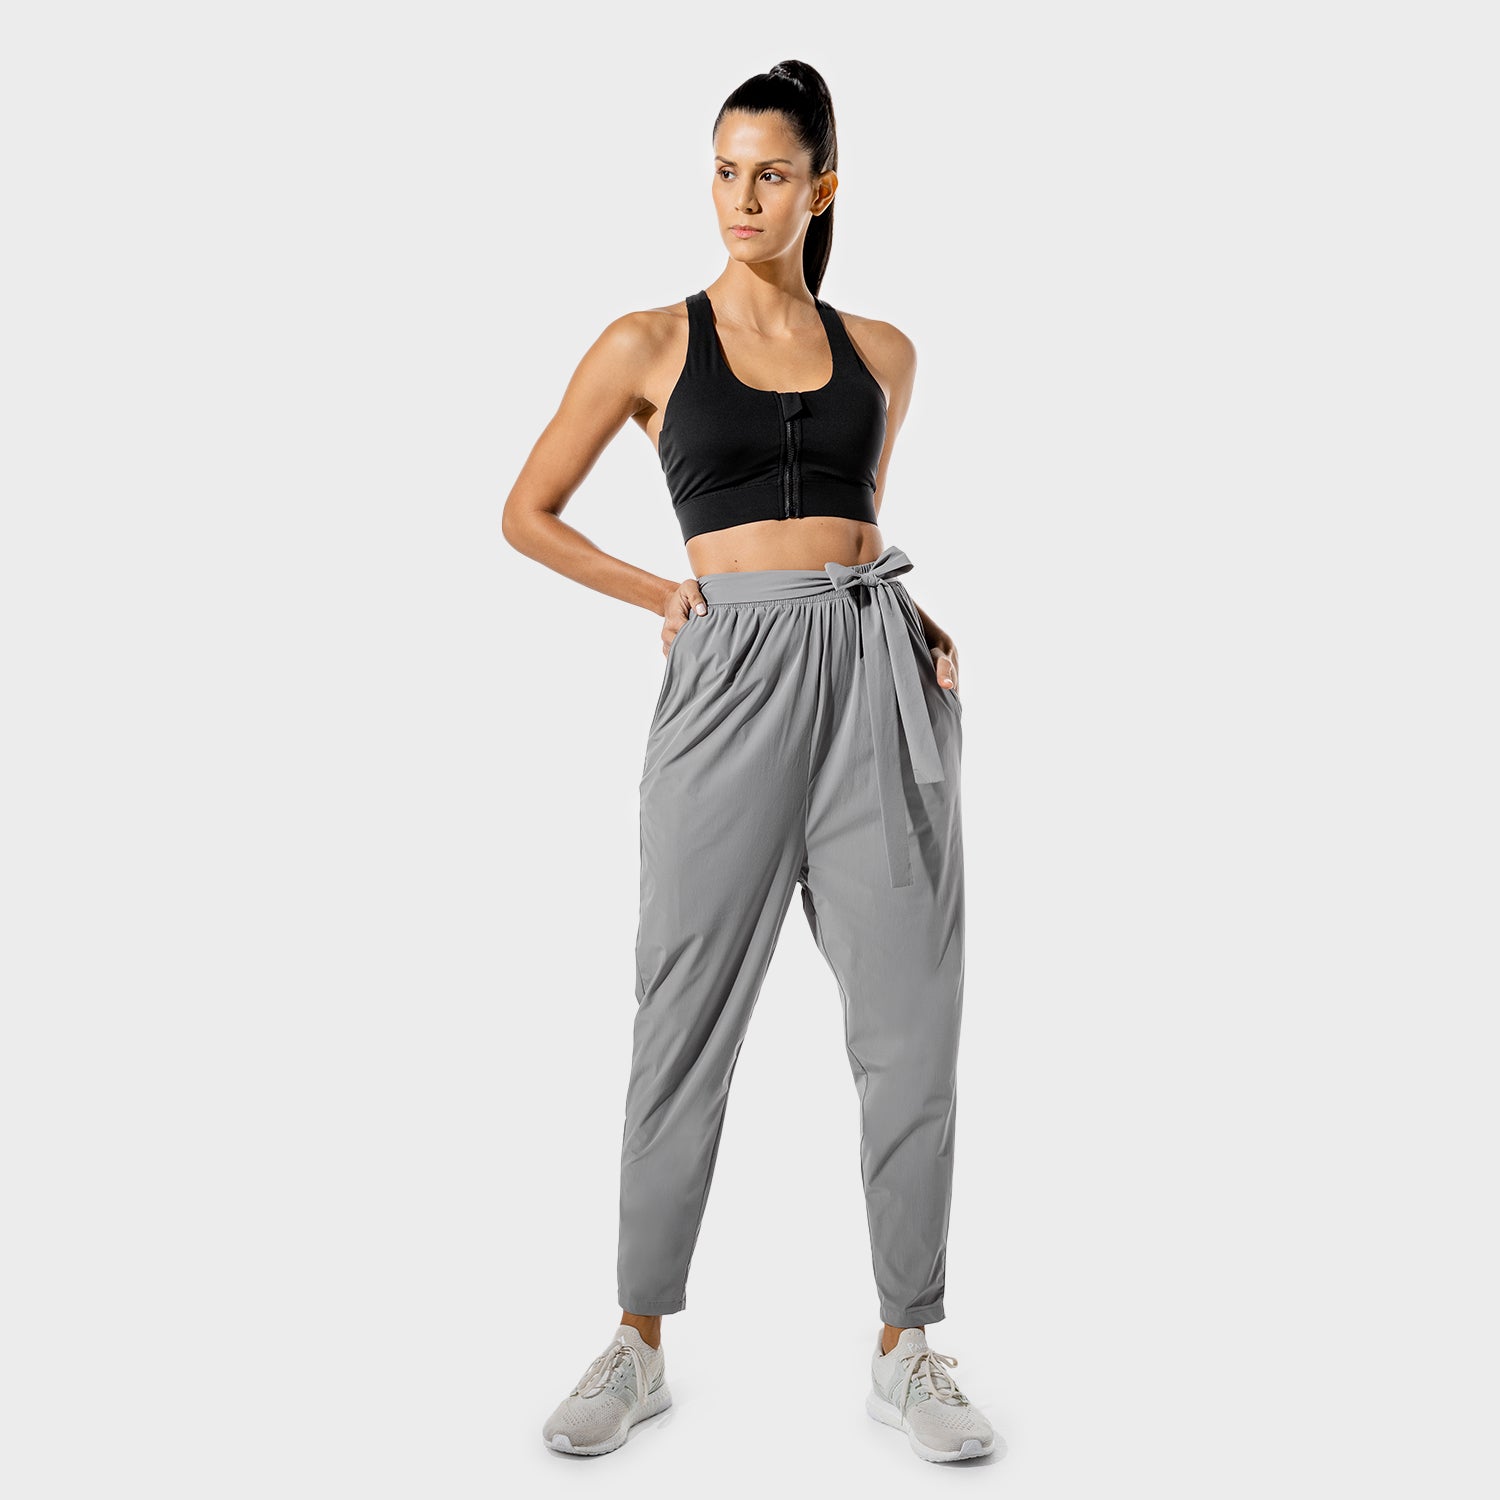 Women's Workout Pants in Gray